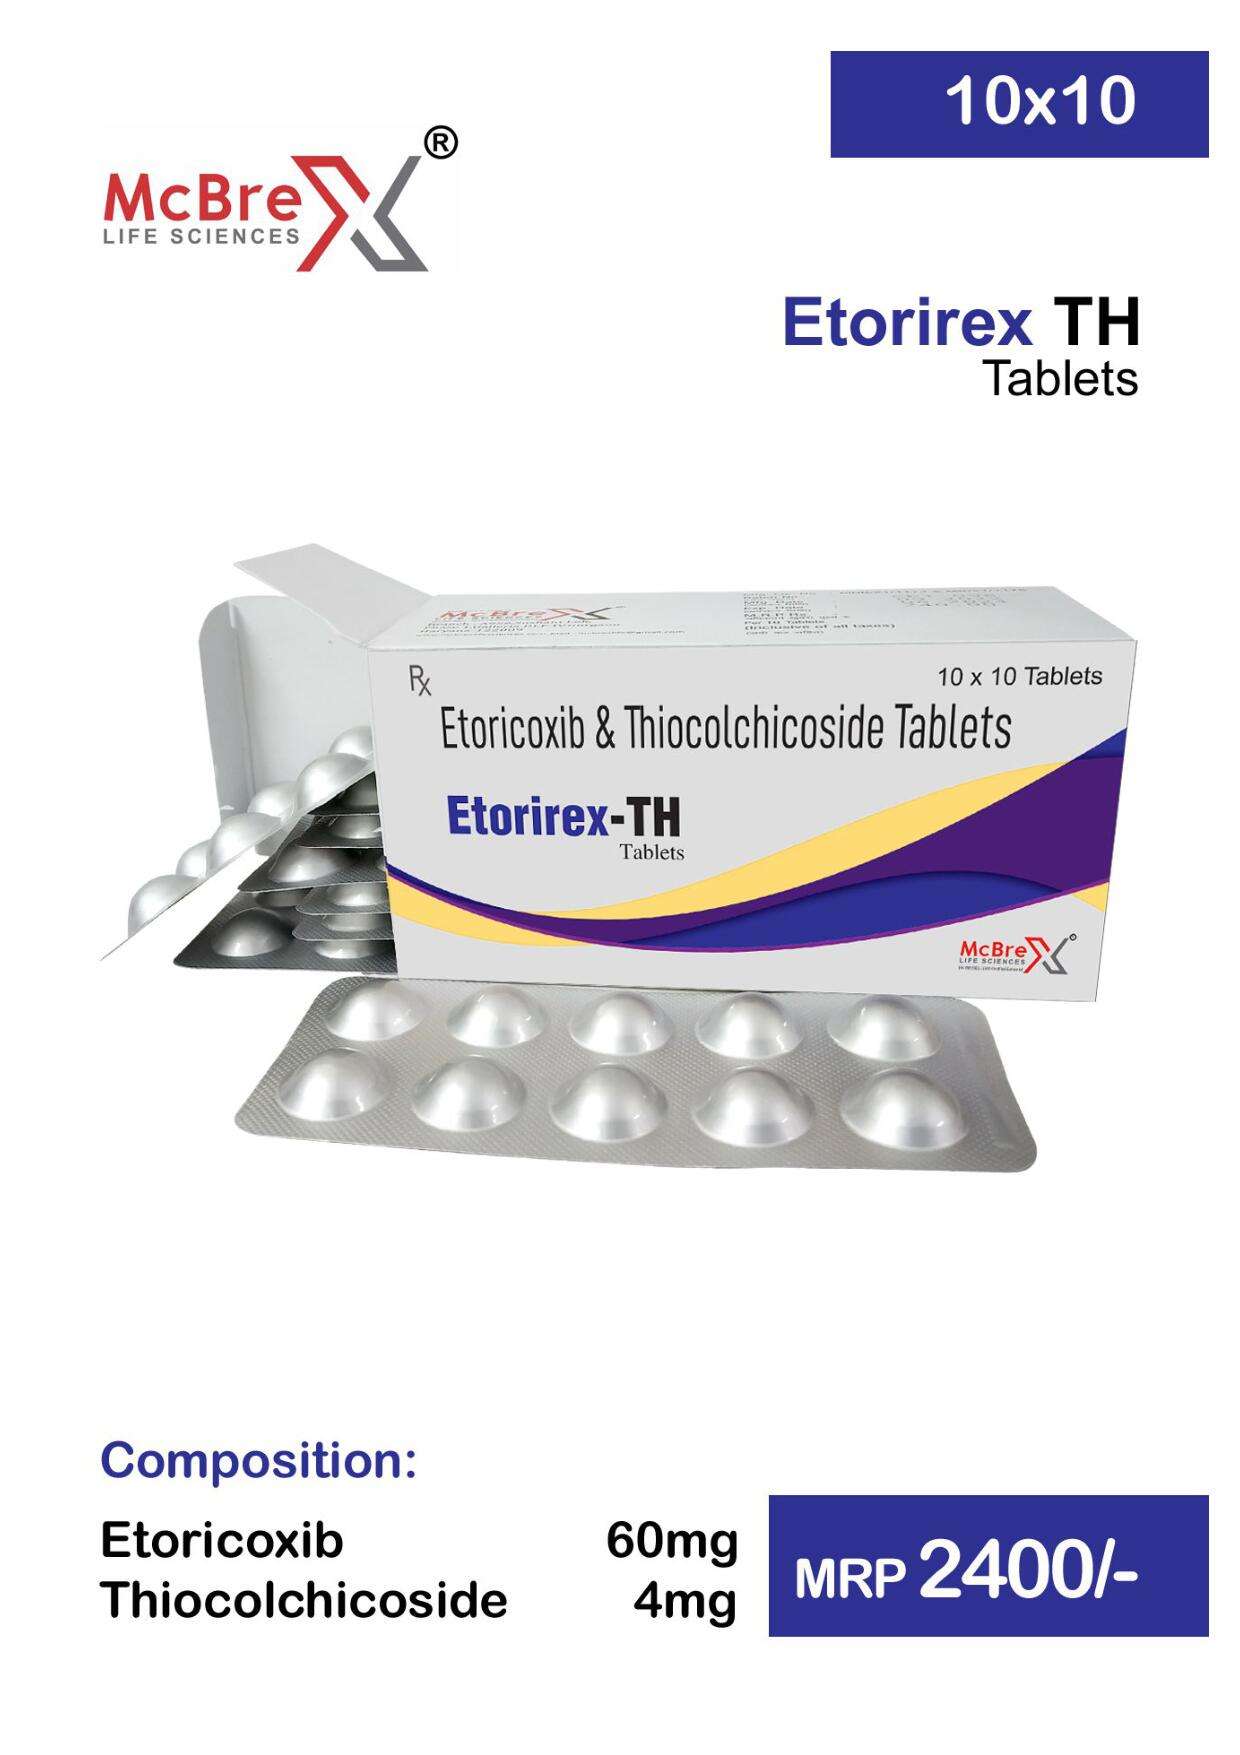 etoricoxib 60mg + thiocolchicoside 4mg